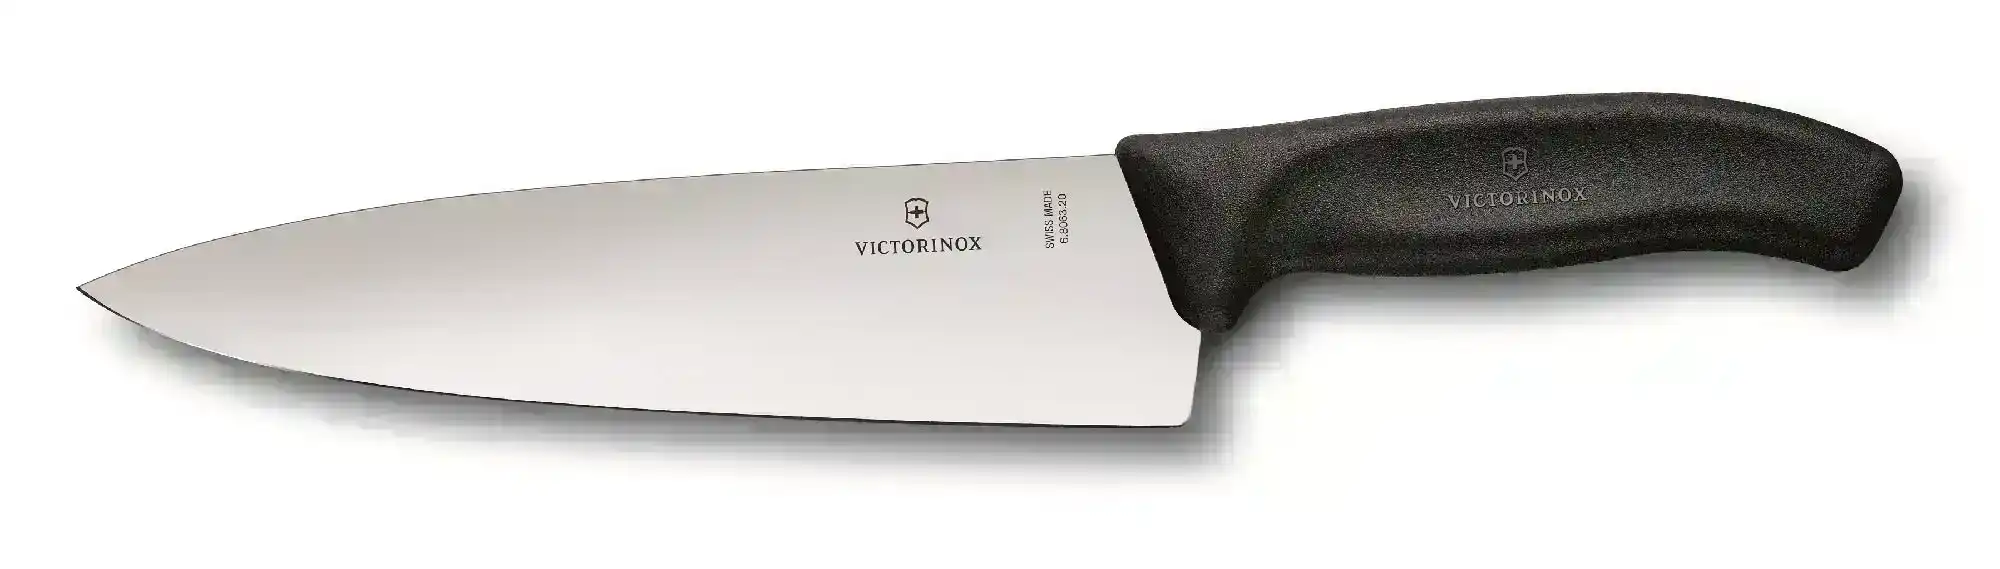 Victorinox Cooks Knife 19cm - Black